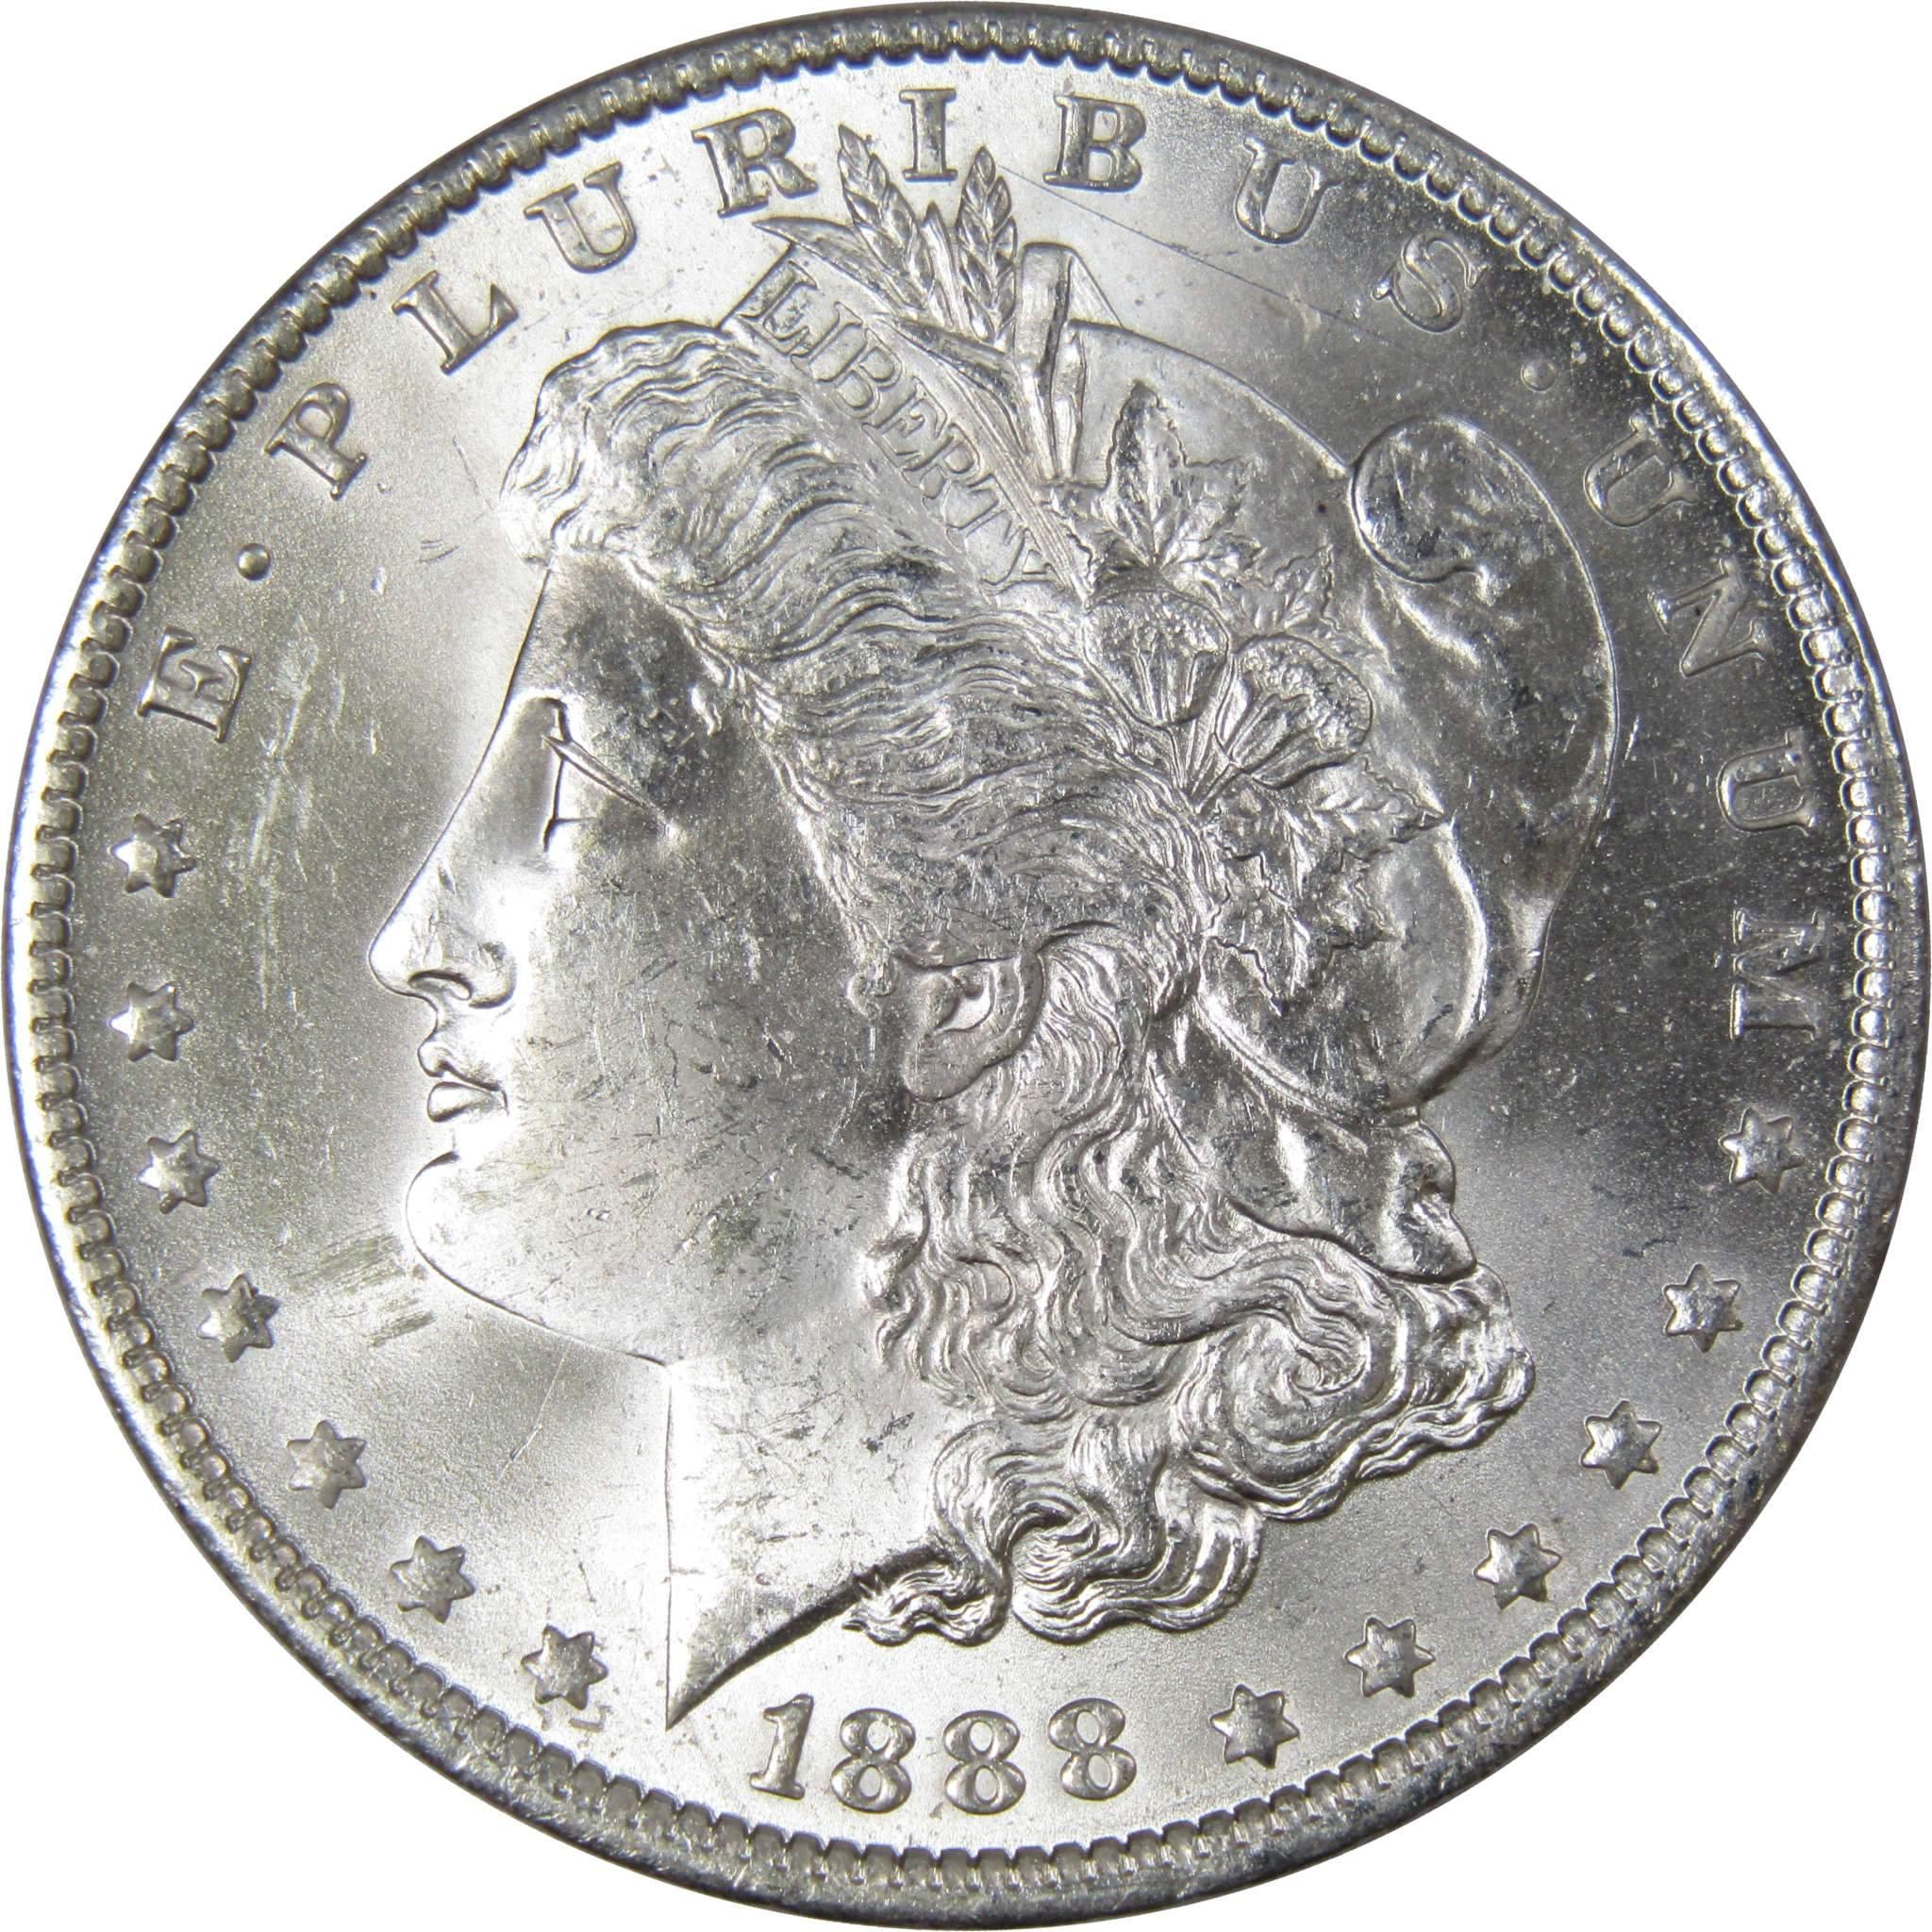 1888 O Morgan Dollar BU Uncirculated Mint State 90% Silver $1 US Coin - Morgan coin - Morgan silver dollar - Morgan silver dollar for sale - Profile Coins &amp; Collectibles